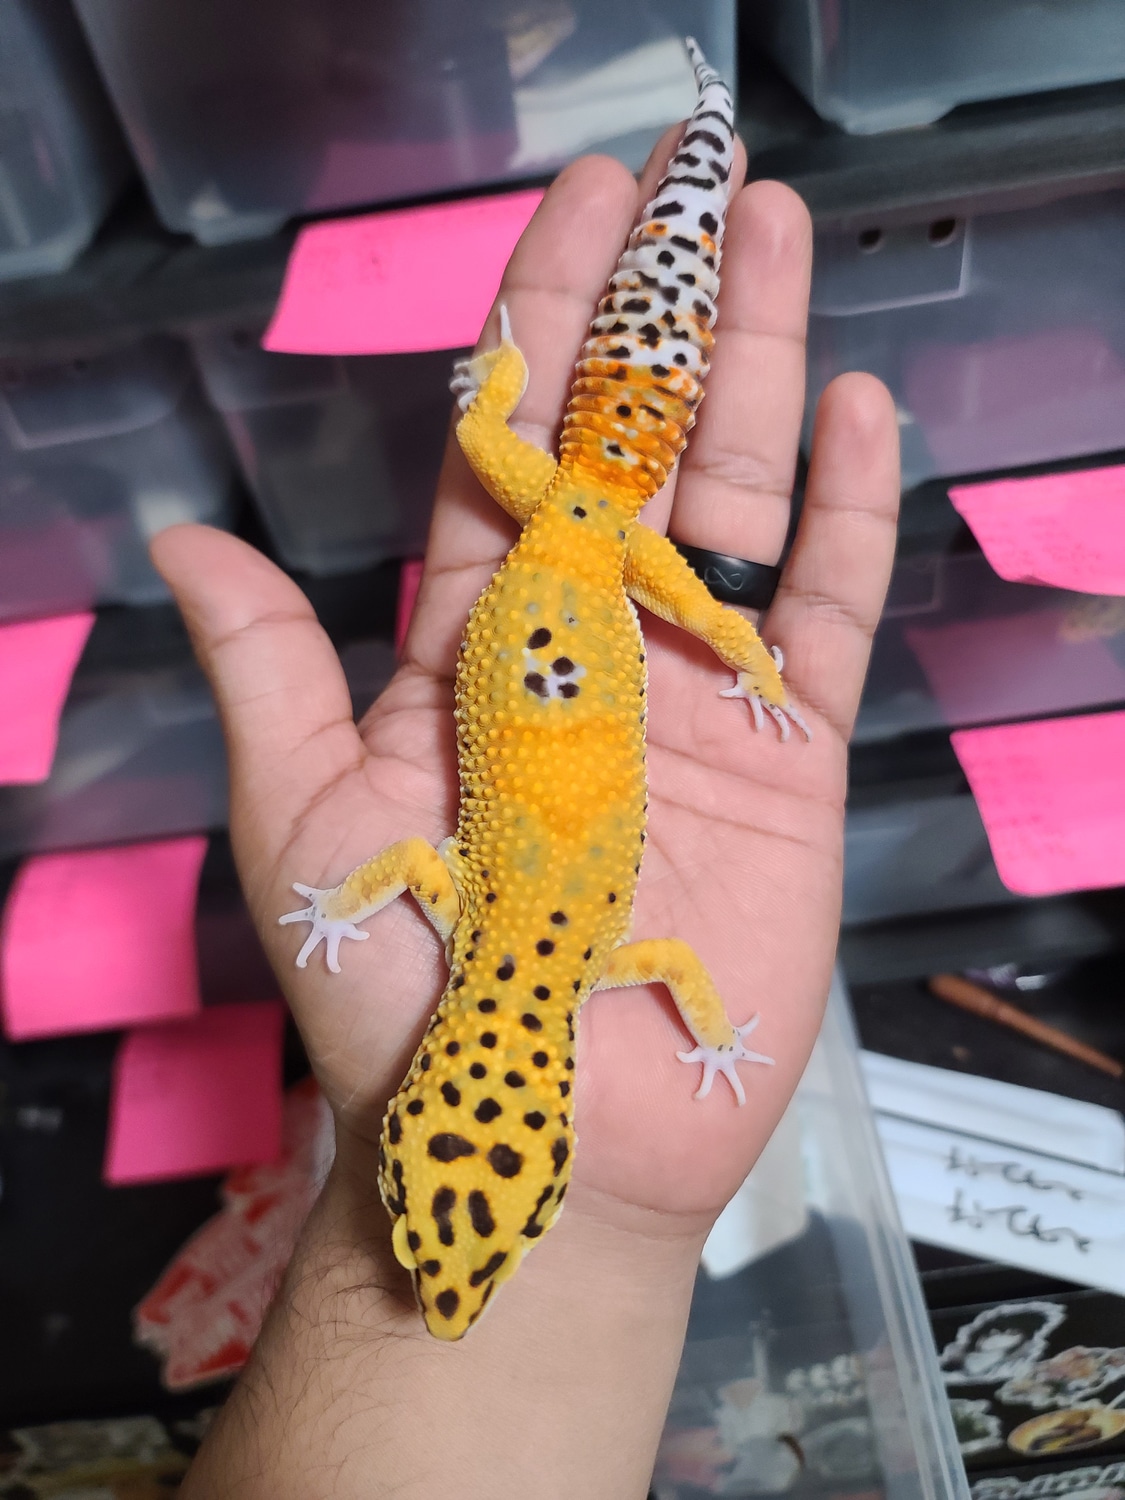 SG Blood Emerine Tangerine Leopard Gecko by Father & son's geckos